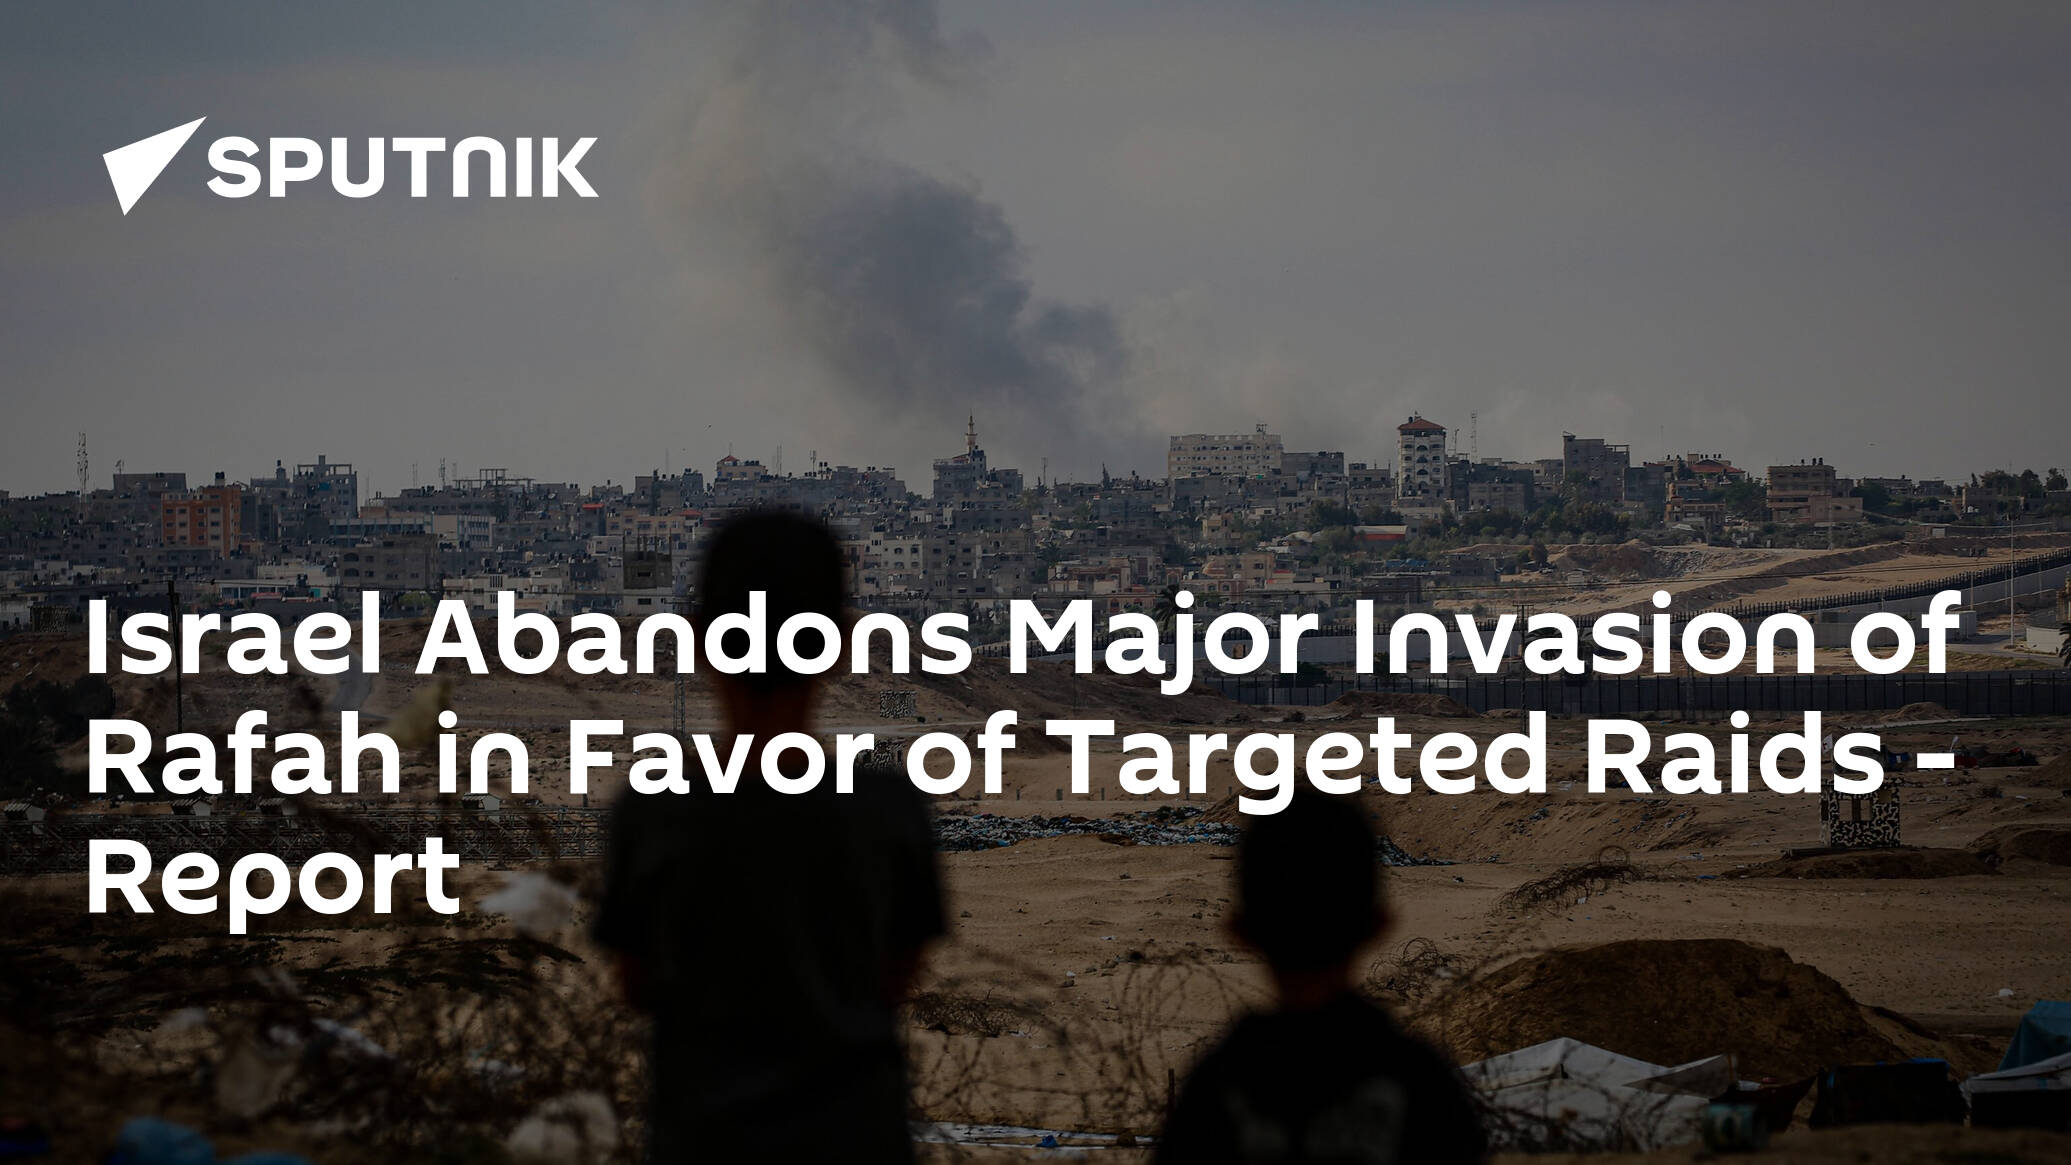 Israel Abandons Major Invasion of Rafah in Favor of Targeted Raids - Report